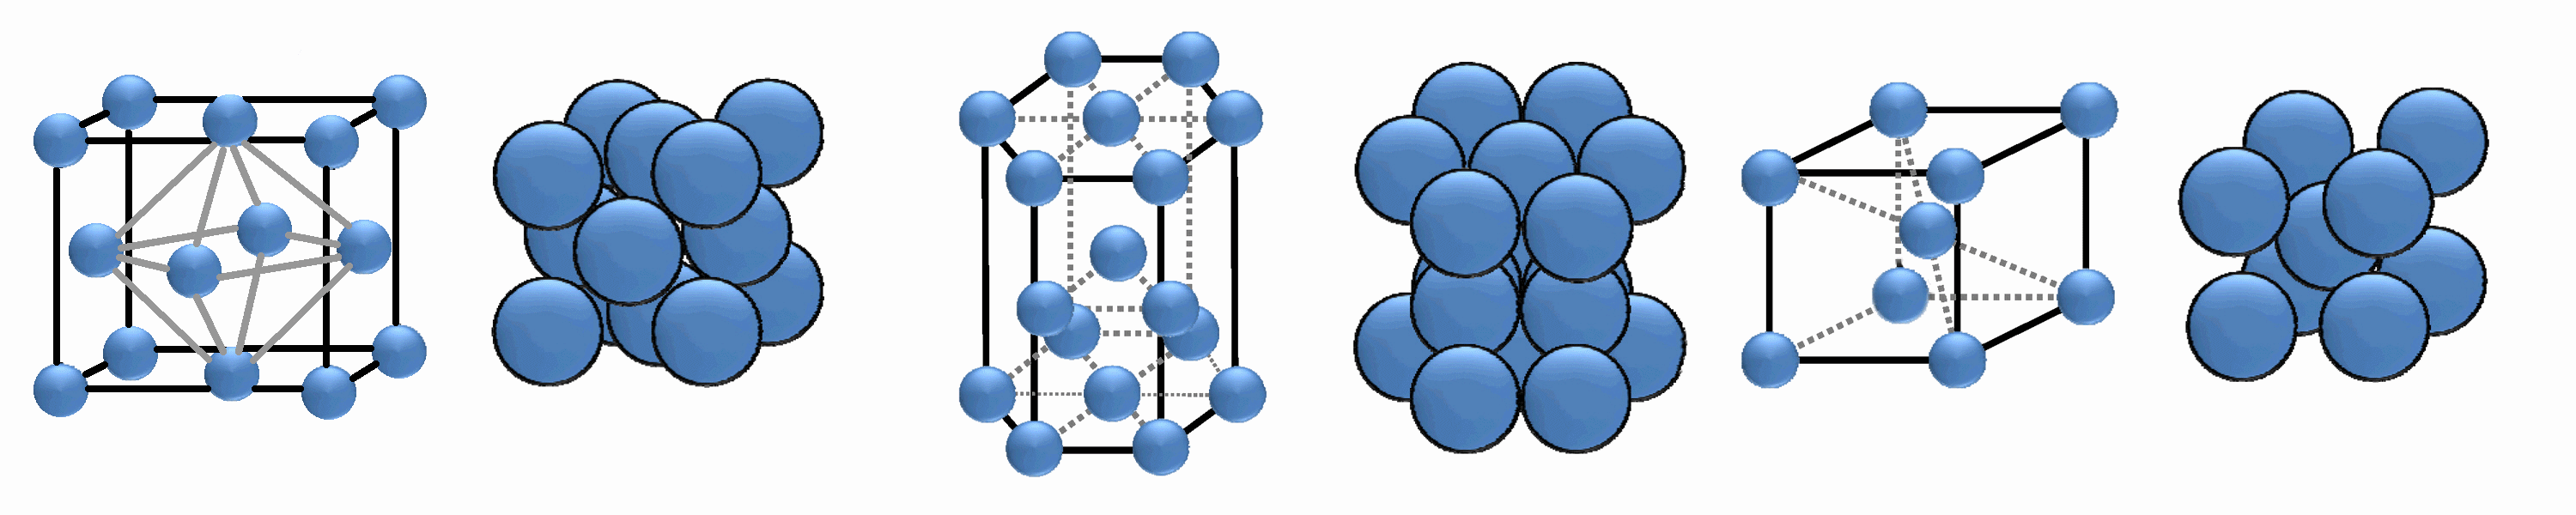 lattice types